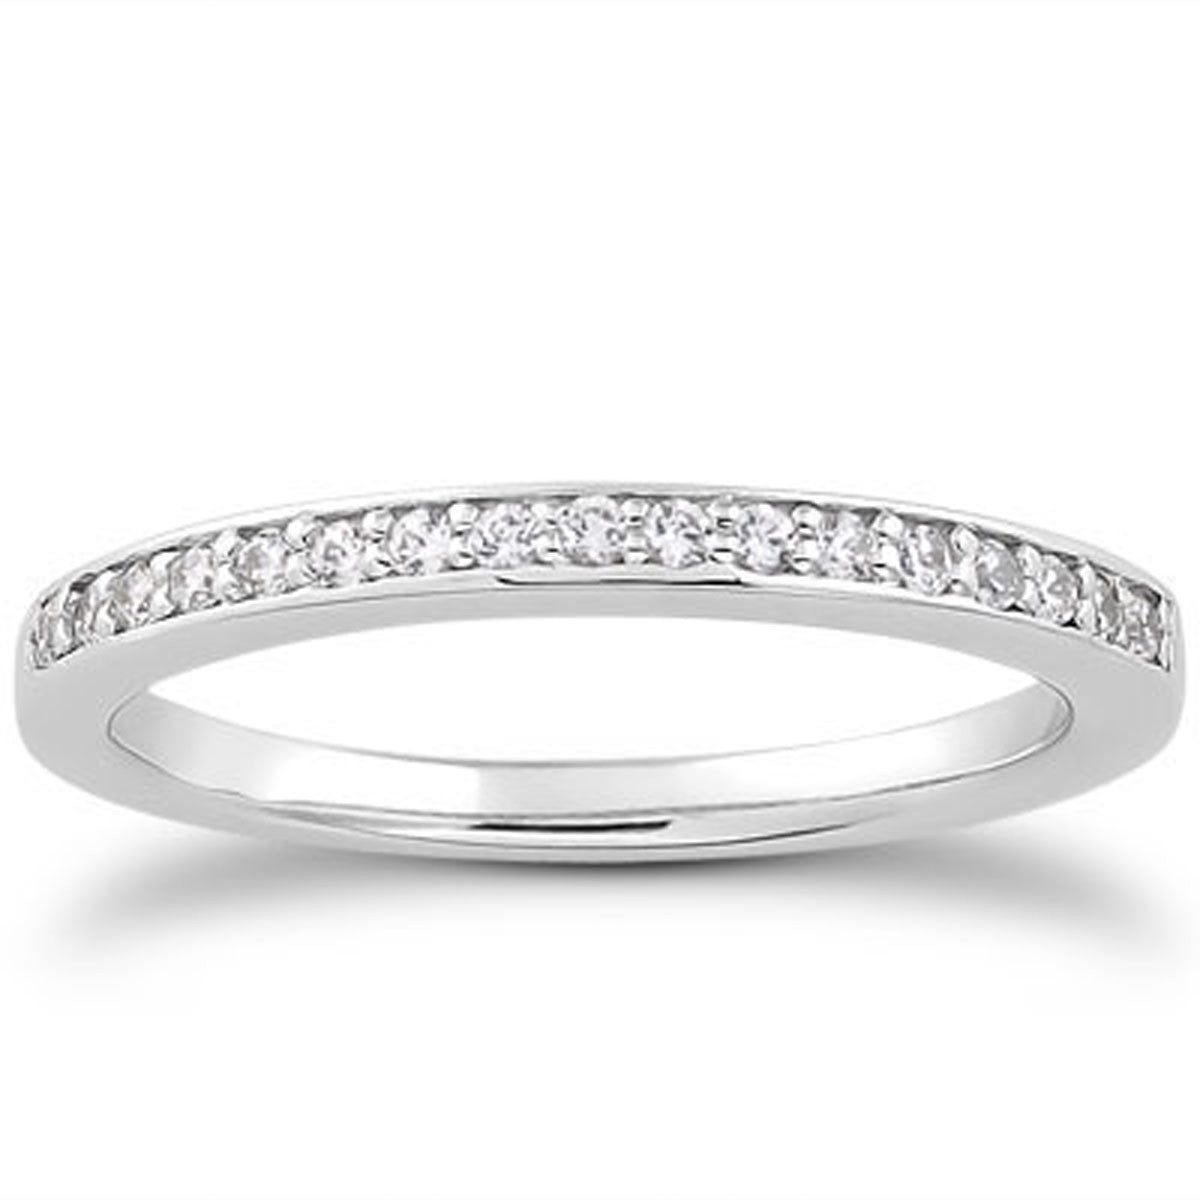 Micro-pave Flat Sided Diamond Wedding Ring Band - 14k White Gold